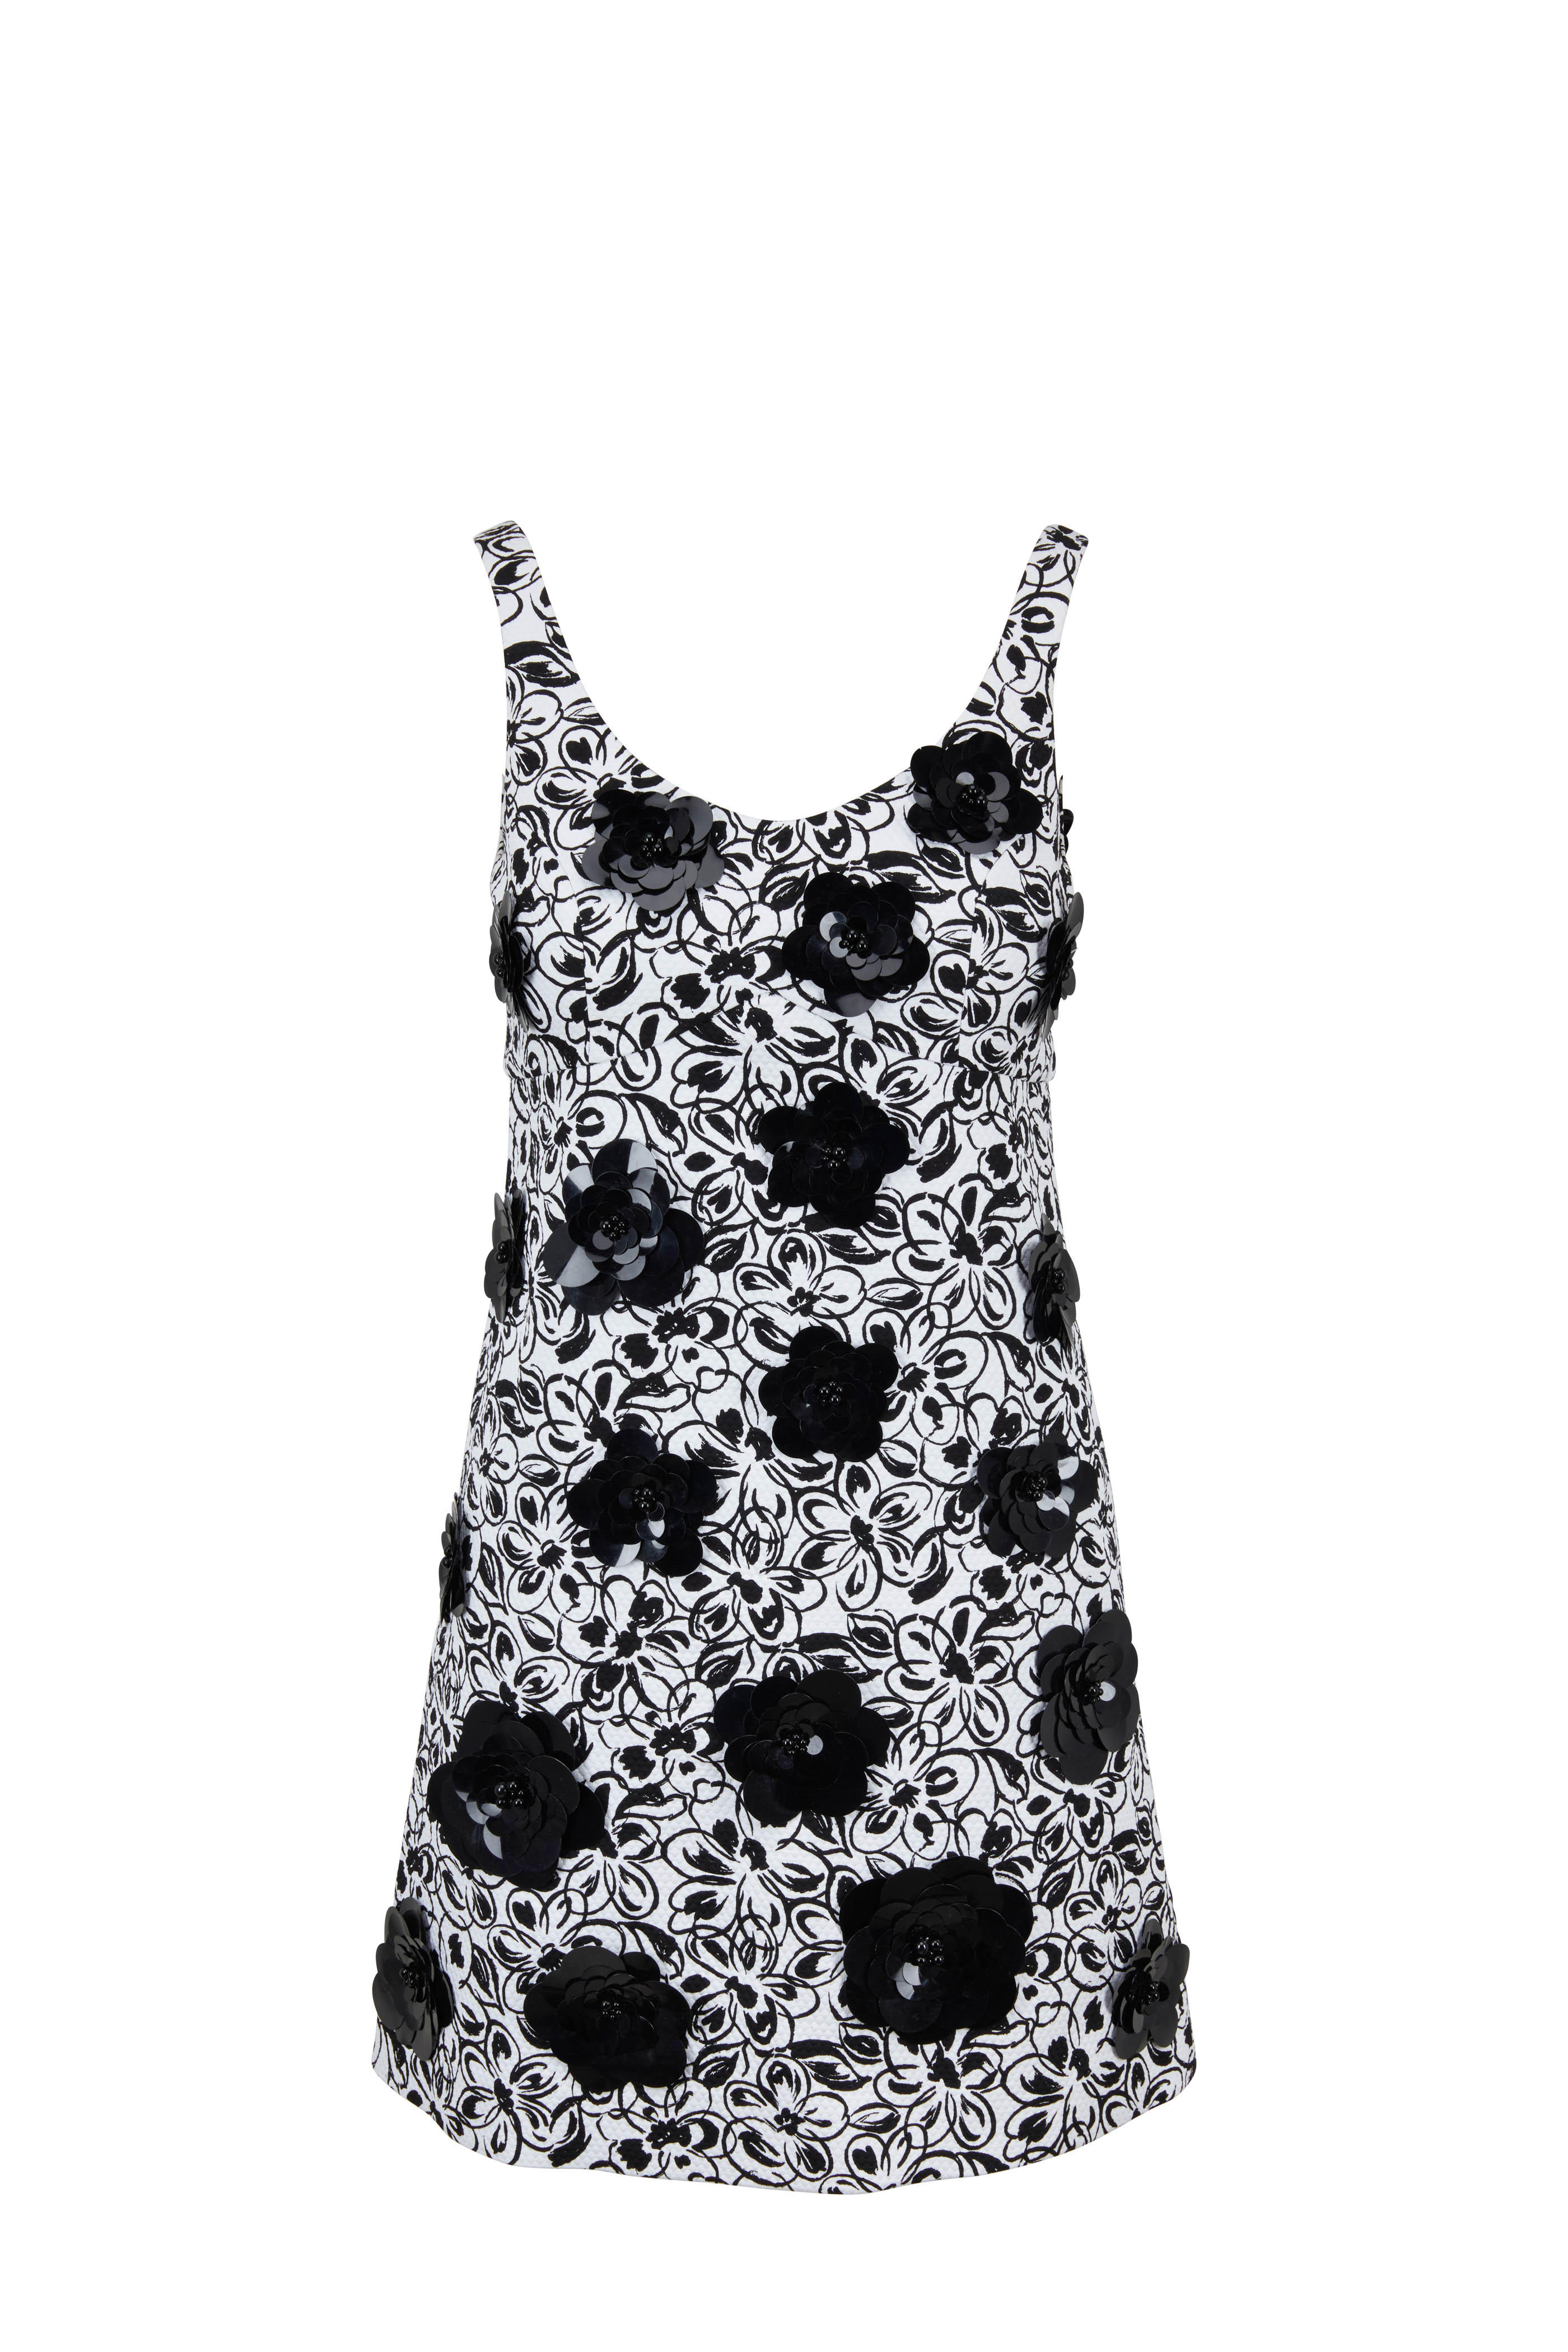 michael kors black and white floral dress